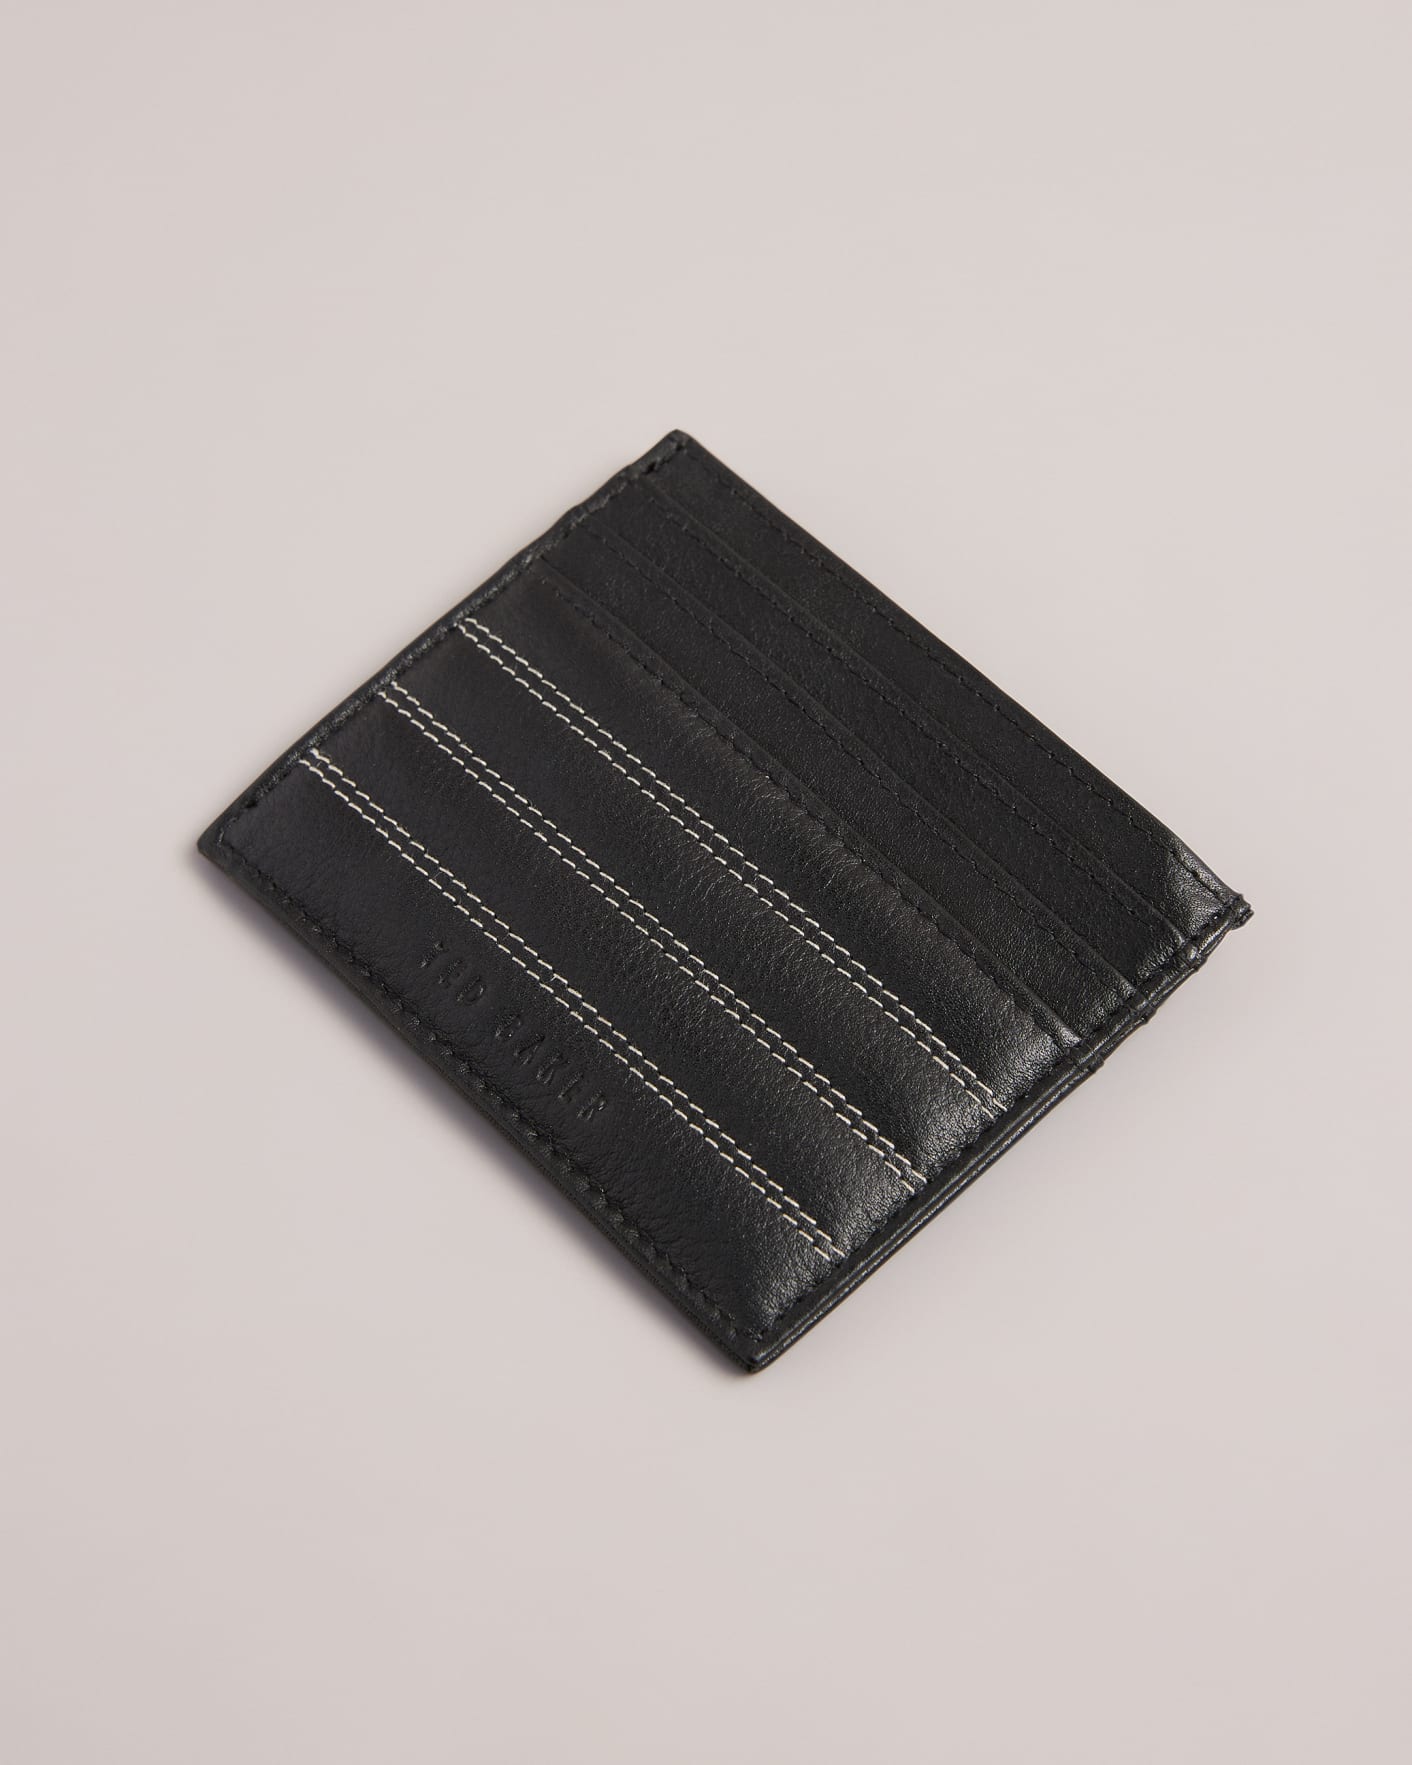 Black Stitch Detail Wallet and Cardholder Giftset Ted Baker